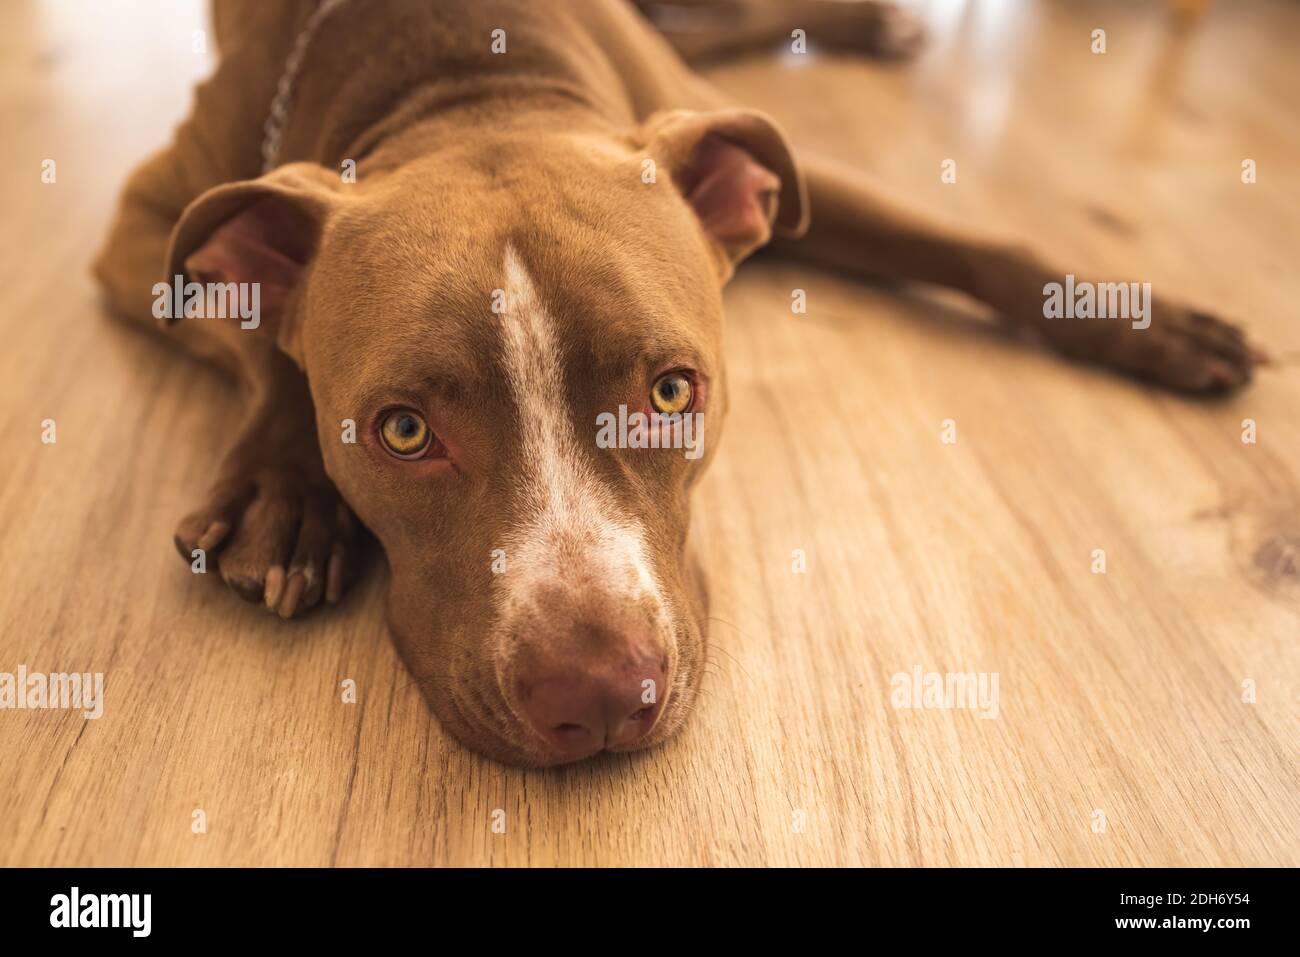 Dog lying on wooden floor indoors, brown amstaff terrier resting, big sad eyes looking at camera Stock Photo